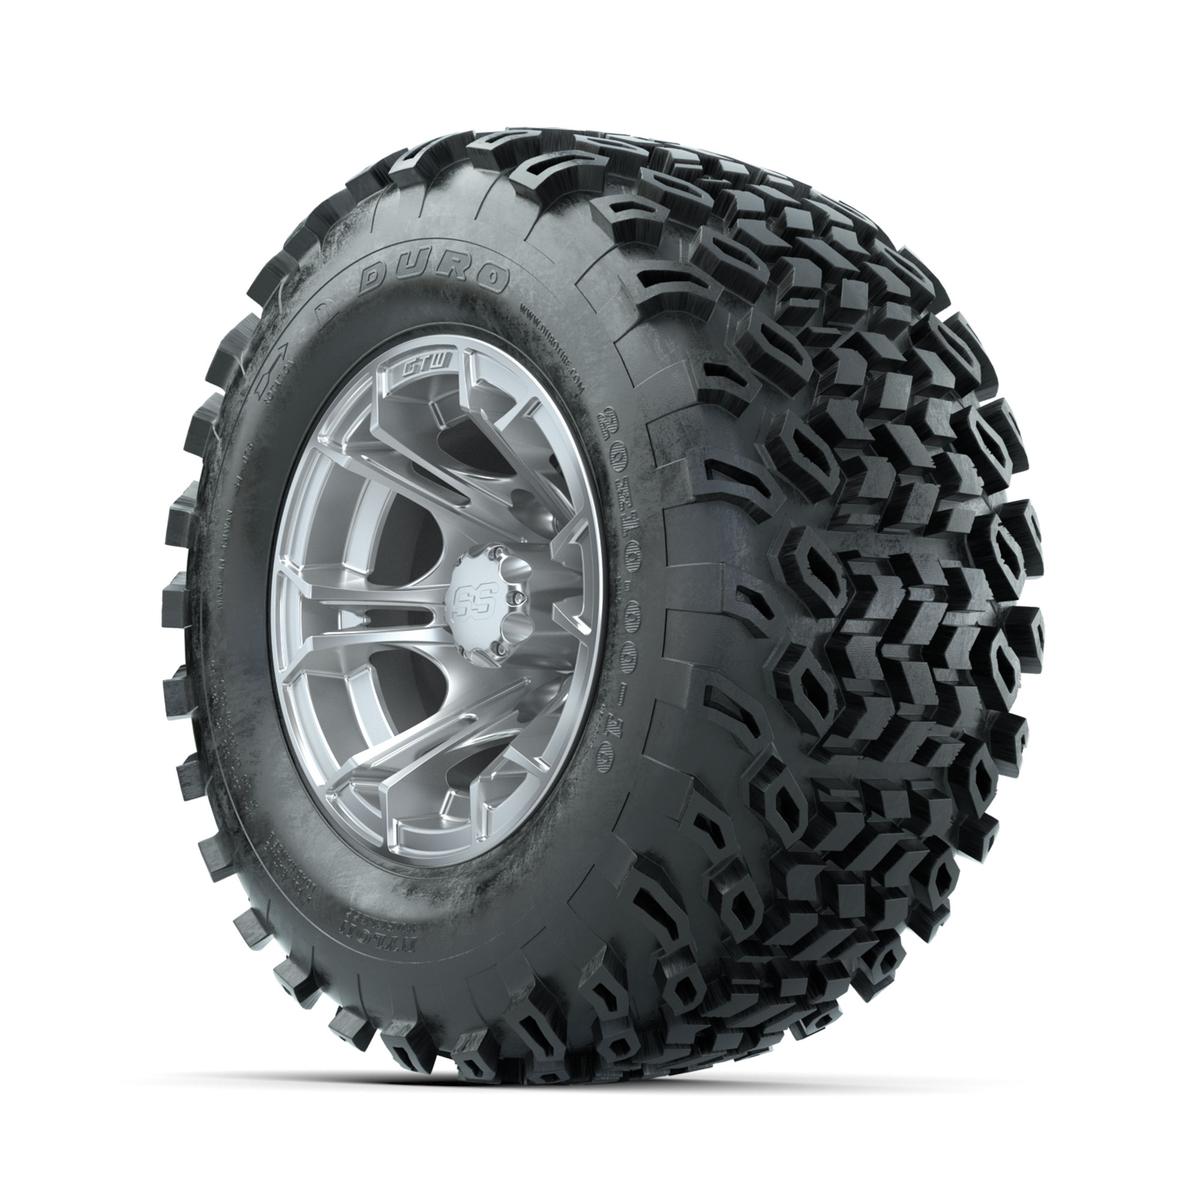 GTW Spyder Silver Brush 10 in Wheels with 20x10-10 Duro Desert All Terrain Tires – Full Set